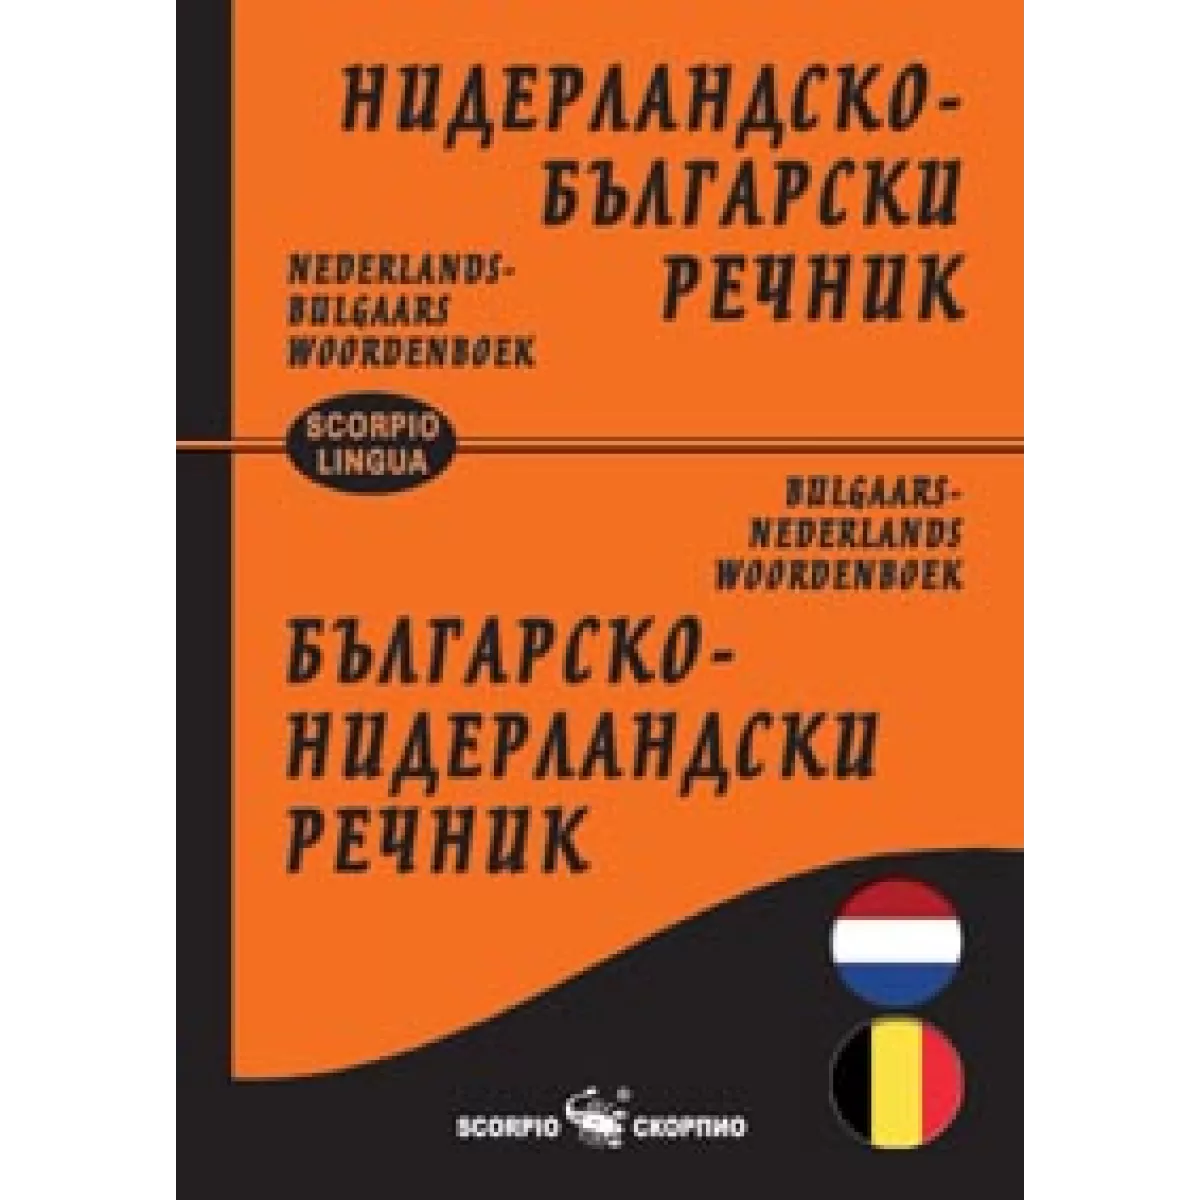 Джобен нидерландско-български речник